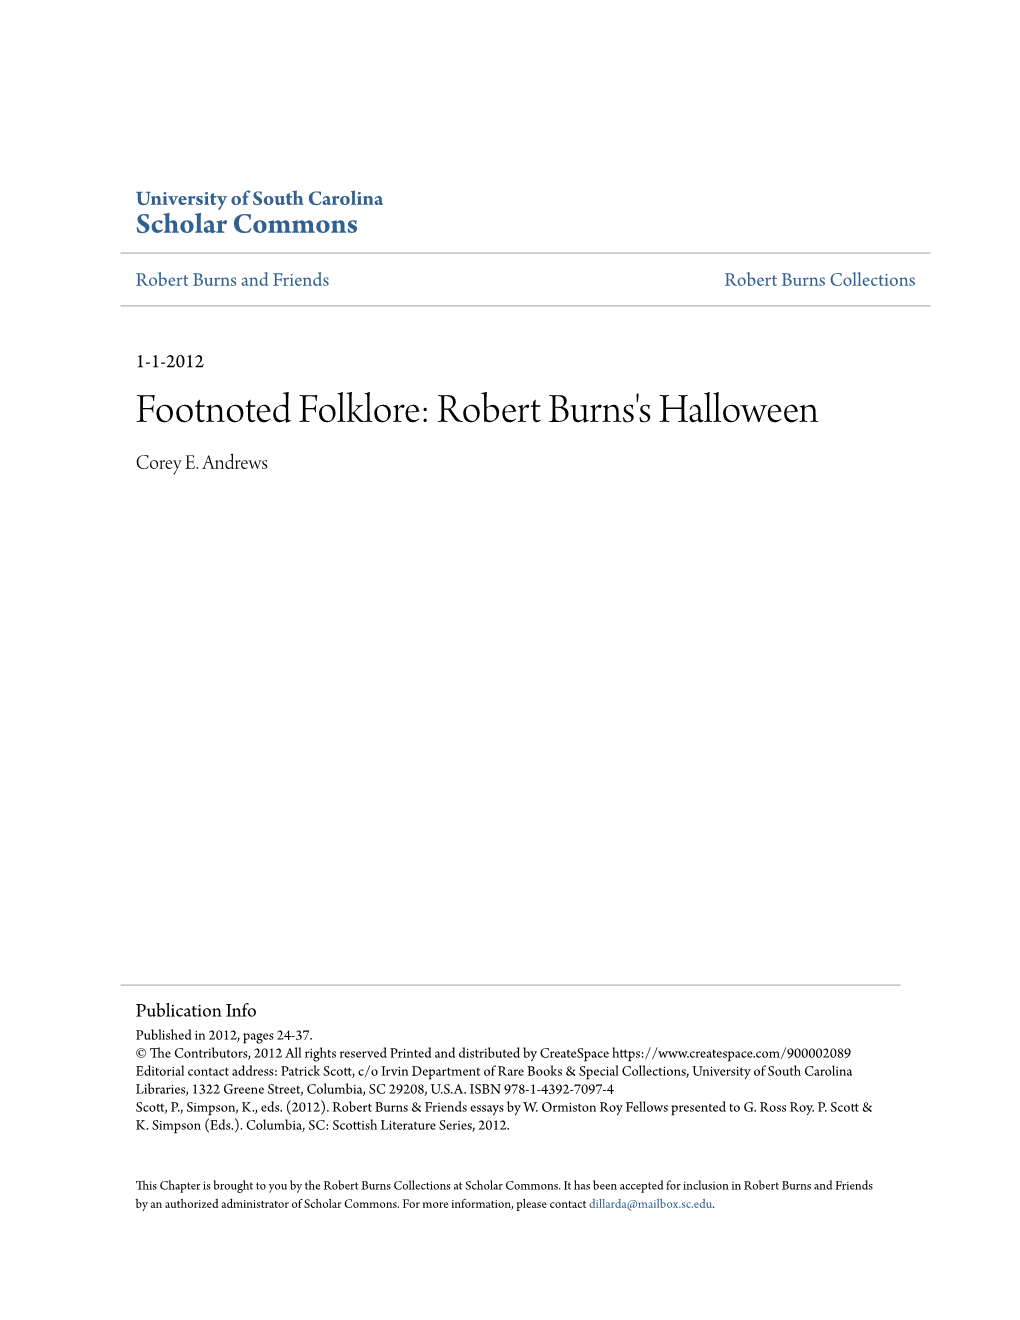 Robert Burns's Halloween Corey E